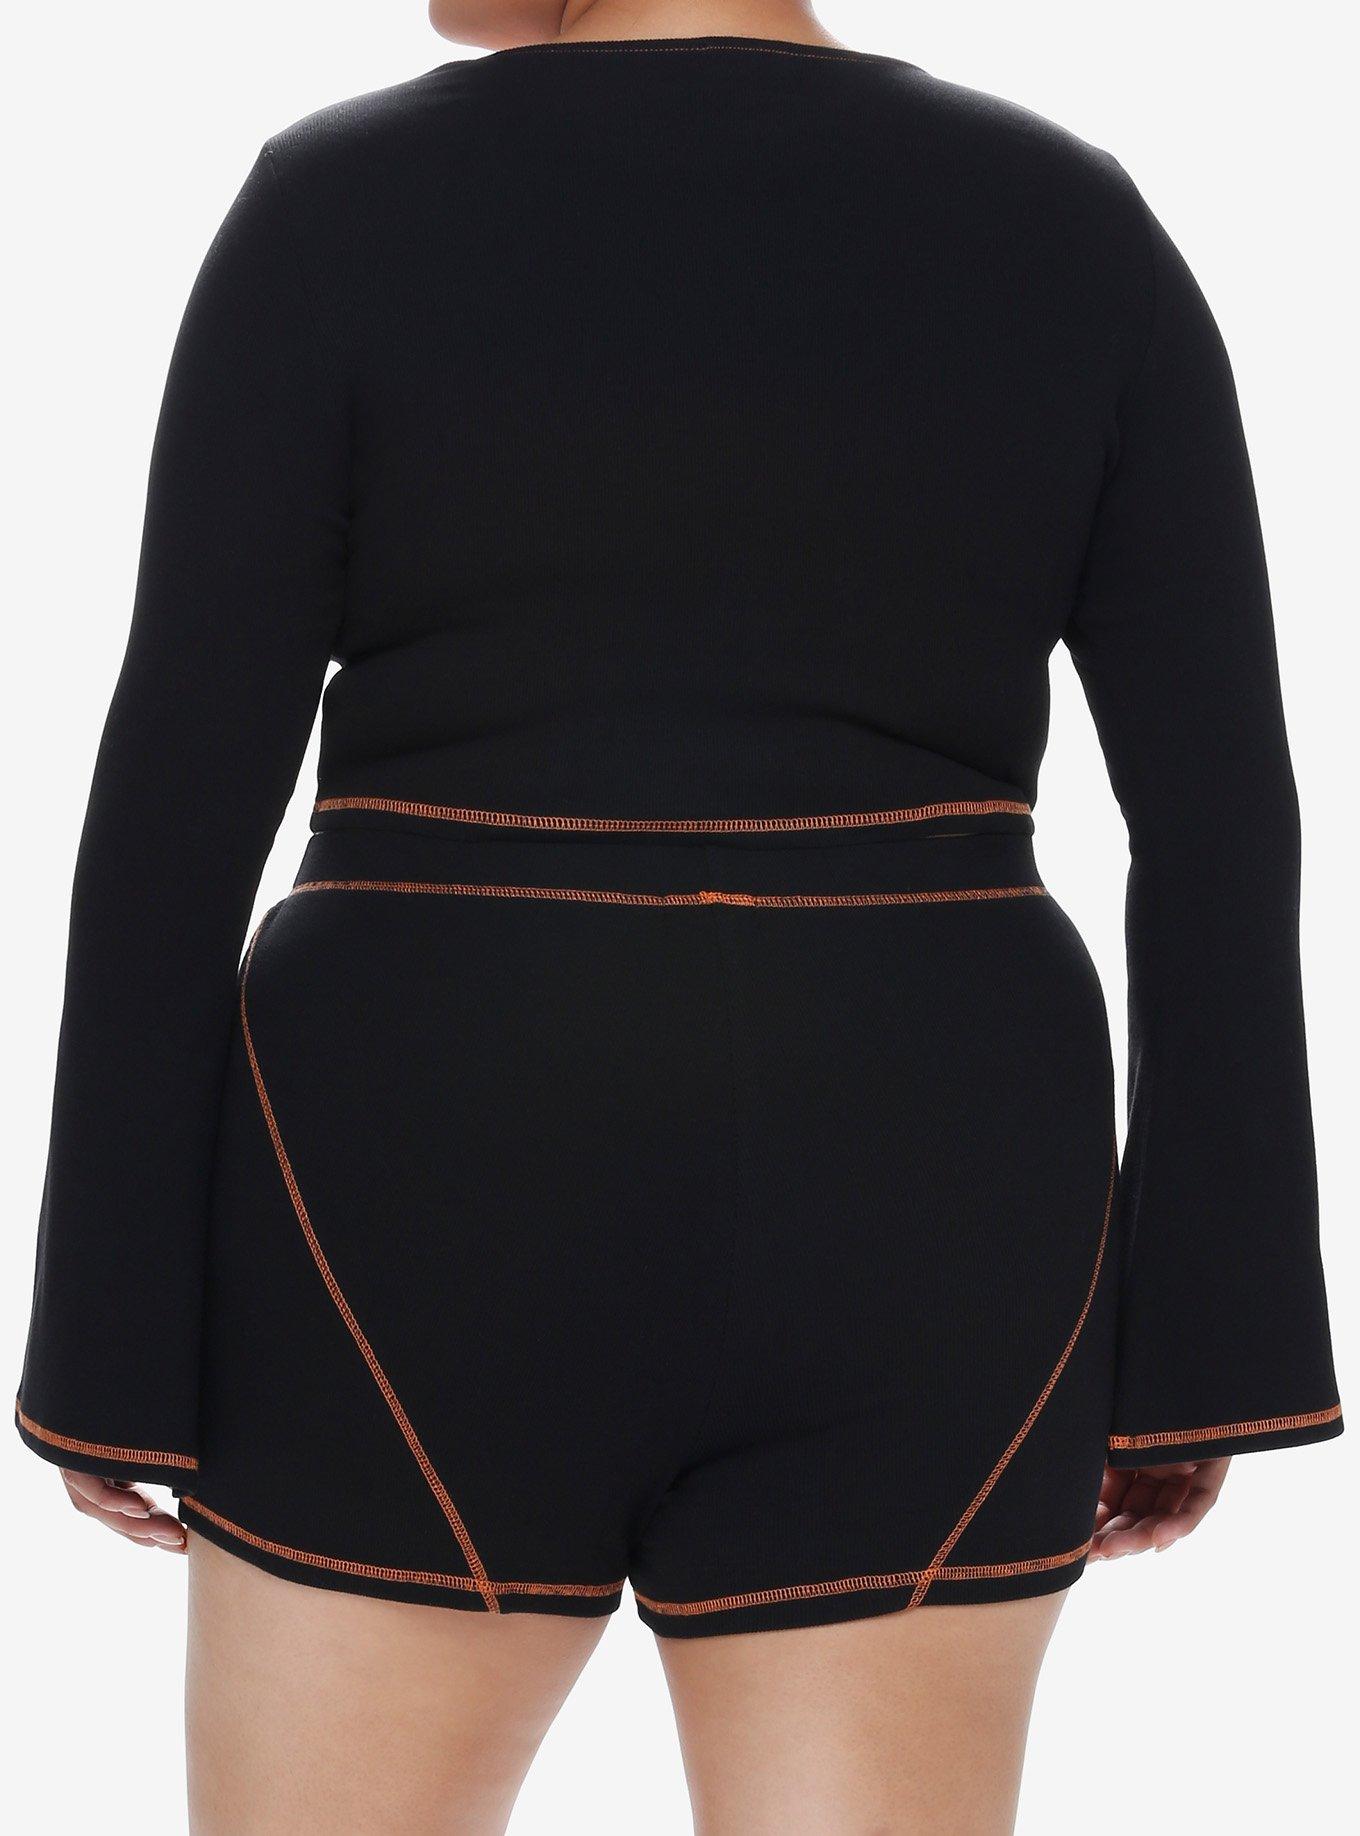 Social Collision Black & Orange Stitch Skull Bell Sleeve Girls Top Plus Size, BLACK, alternate